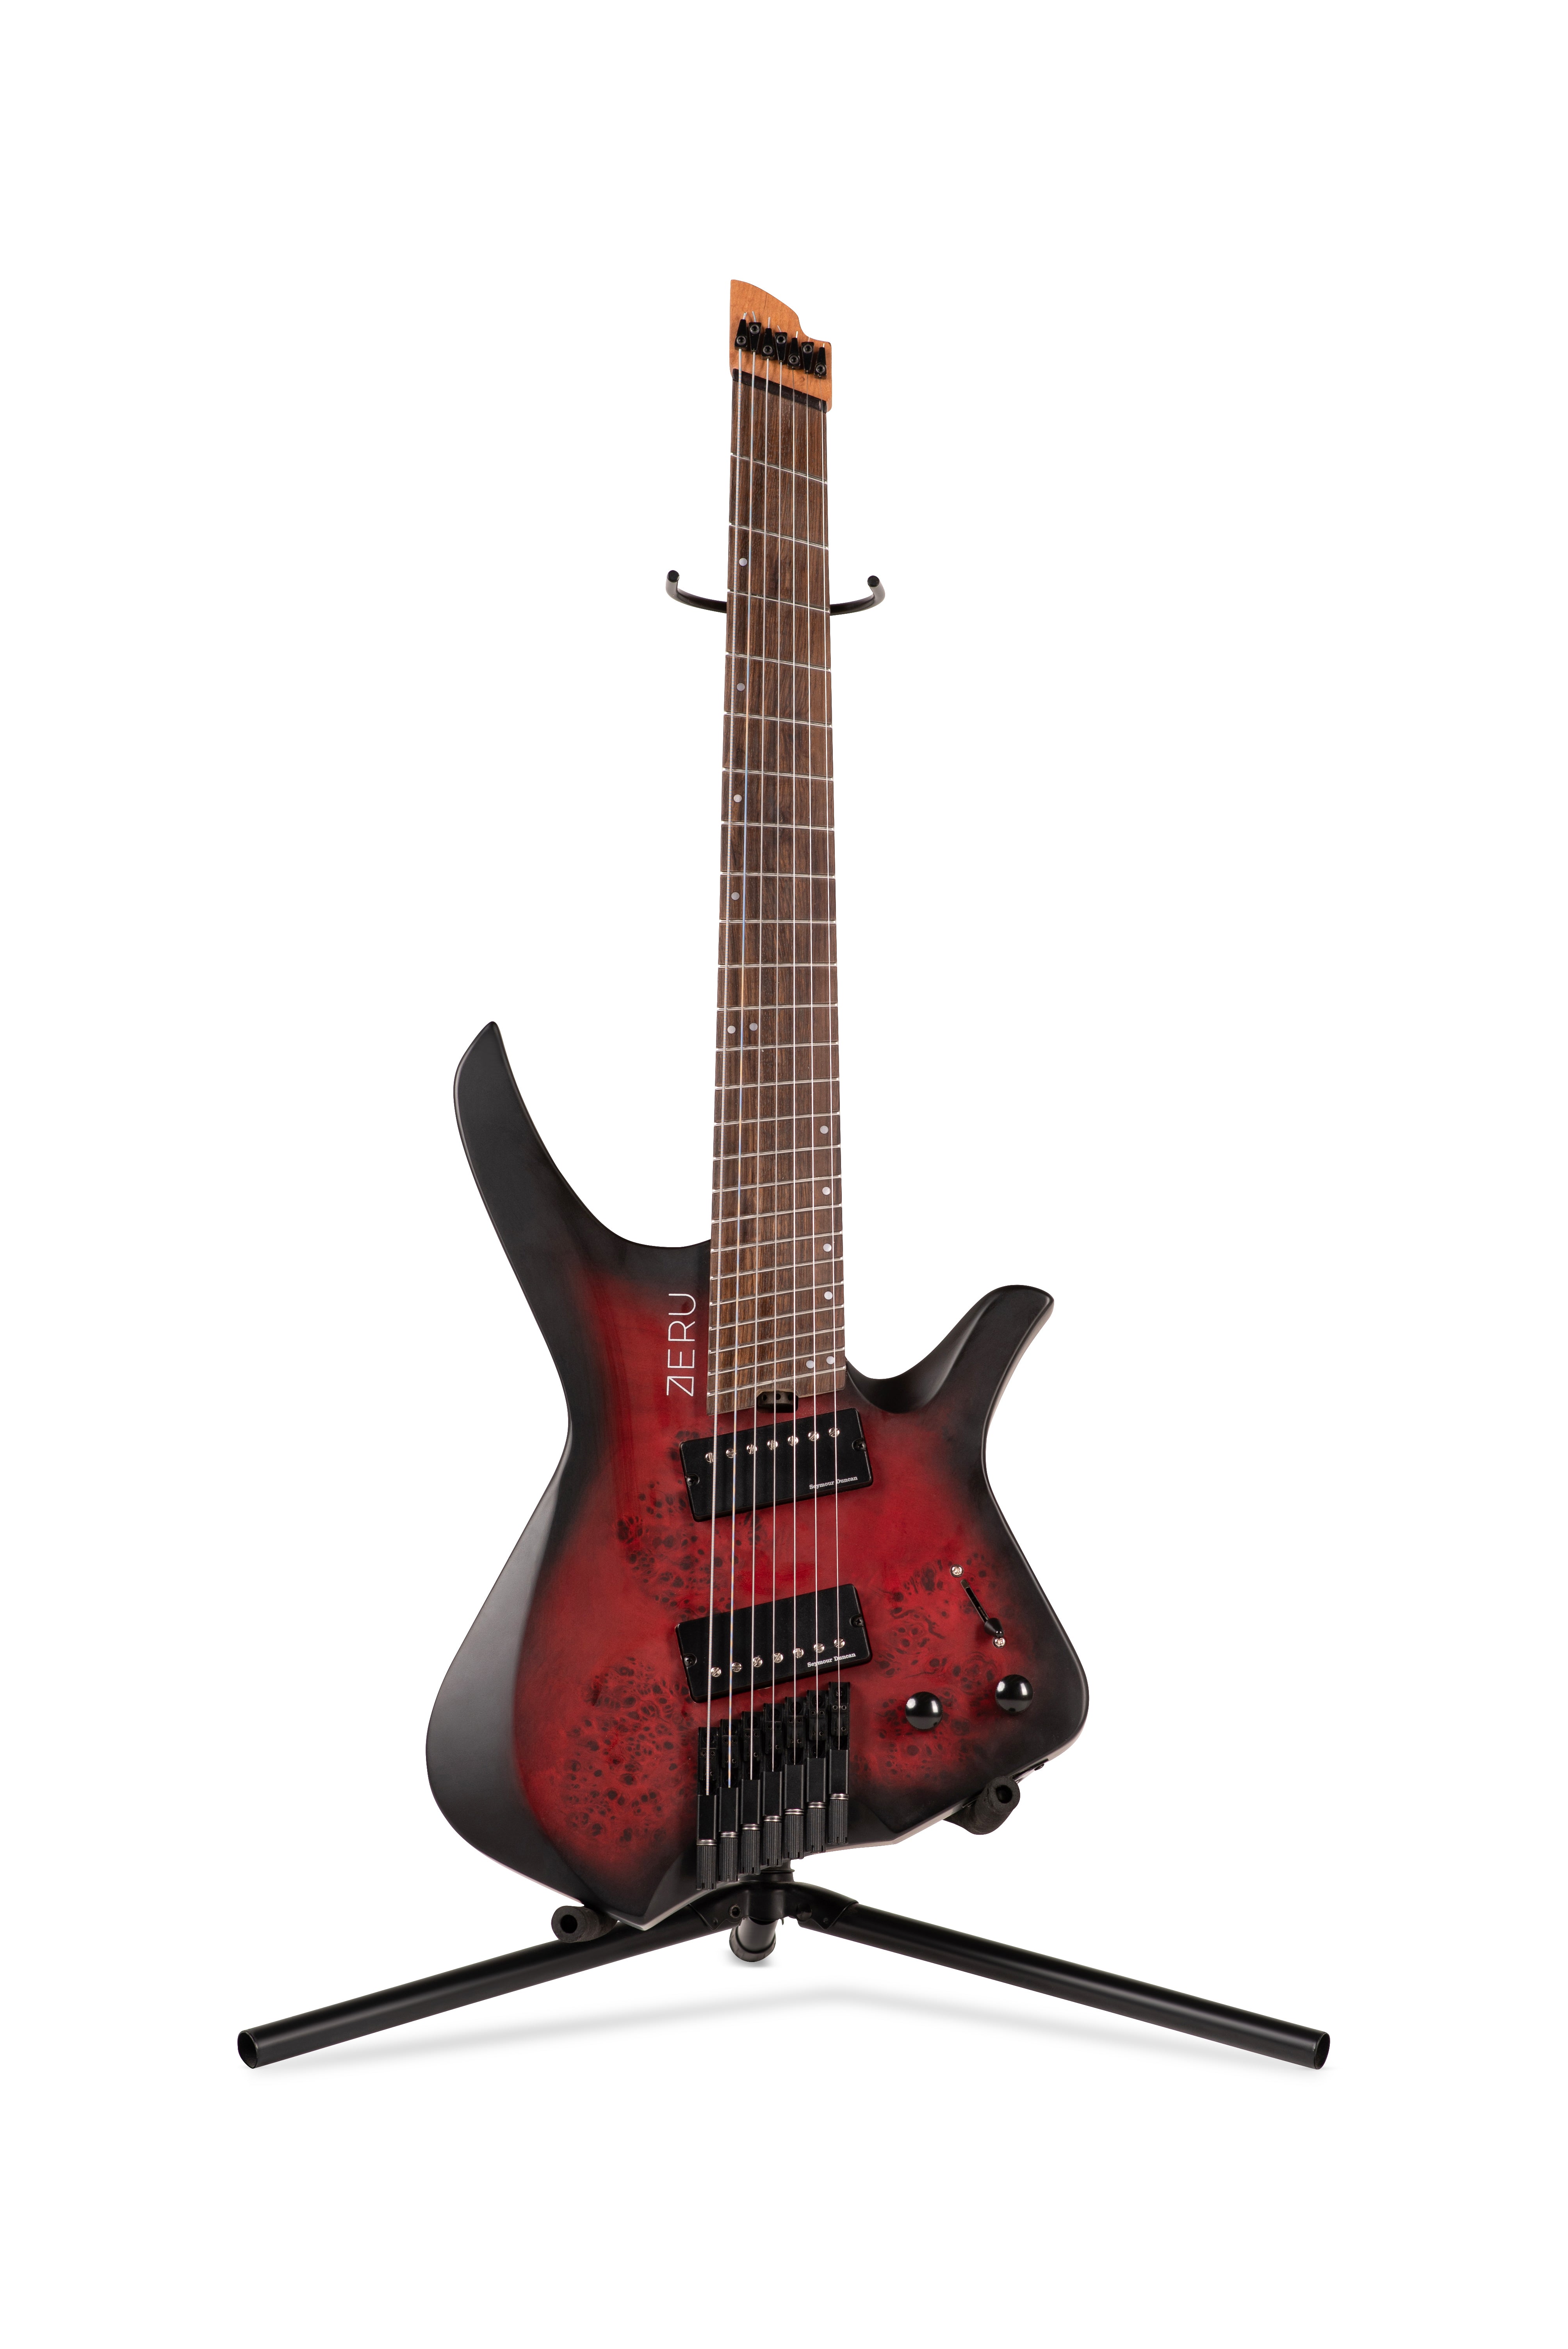 ZERU VOID Justus Hajas Signature Series 7 String Headless Guitar in Scorched Scarlet